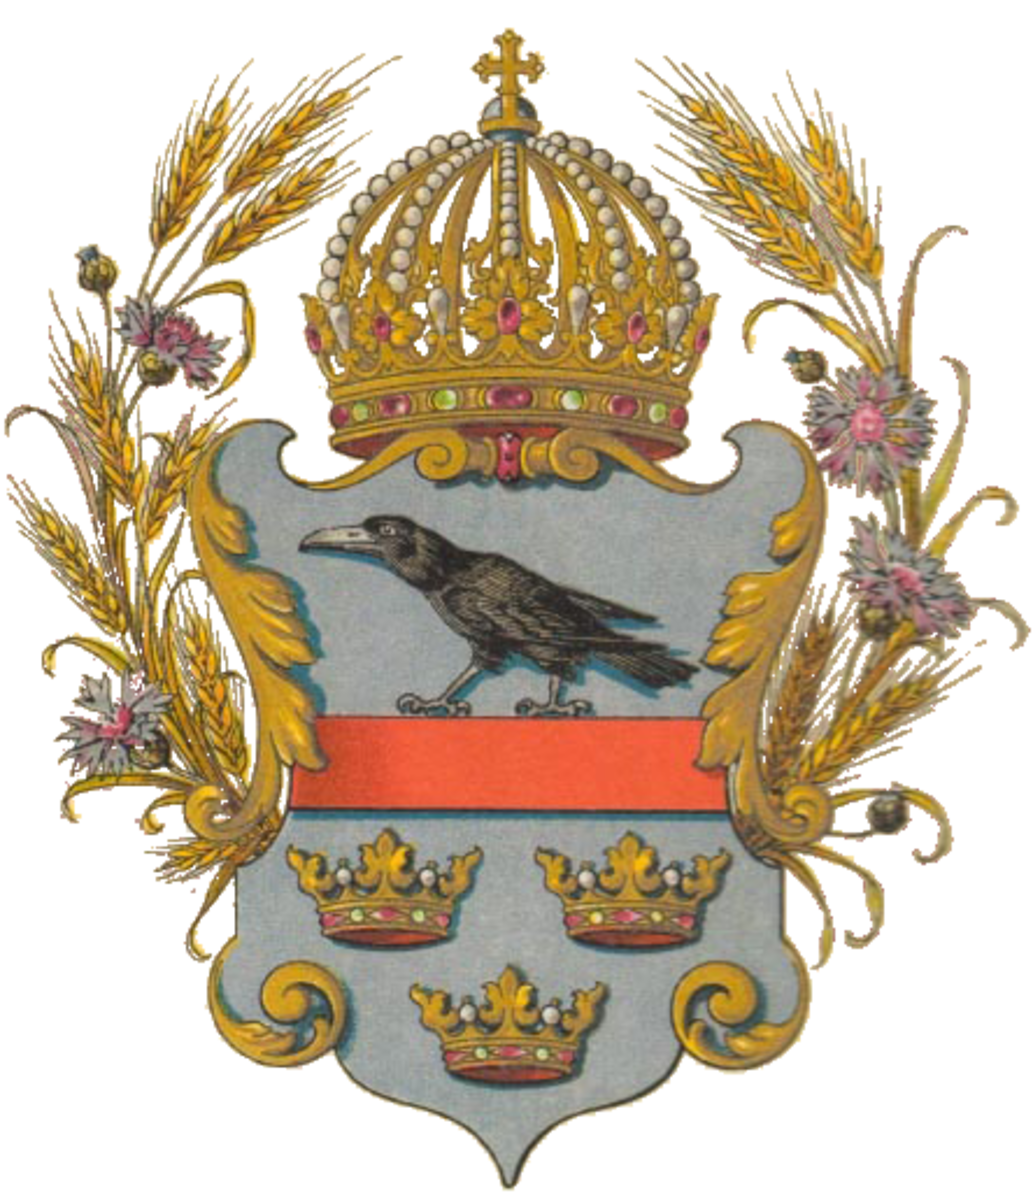 The impressive coat of arms of the 19th century Kingdom of Galicia-Lodomeria